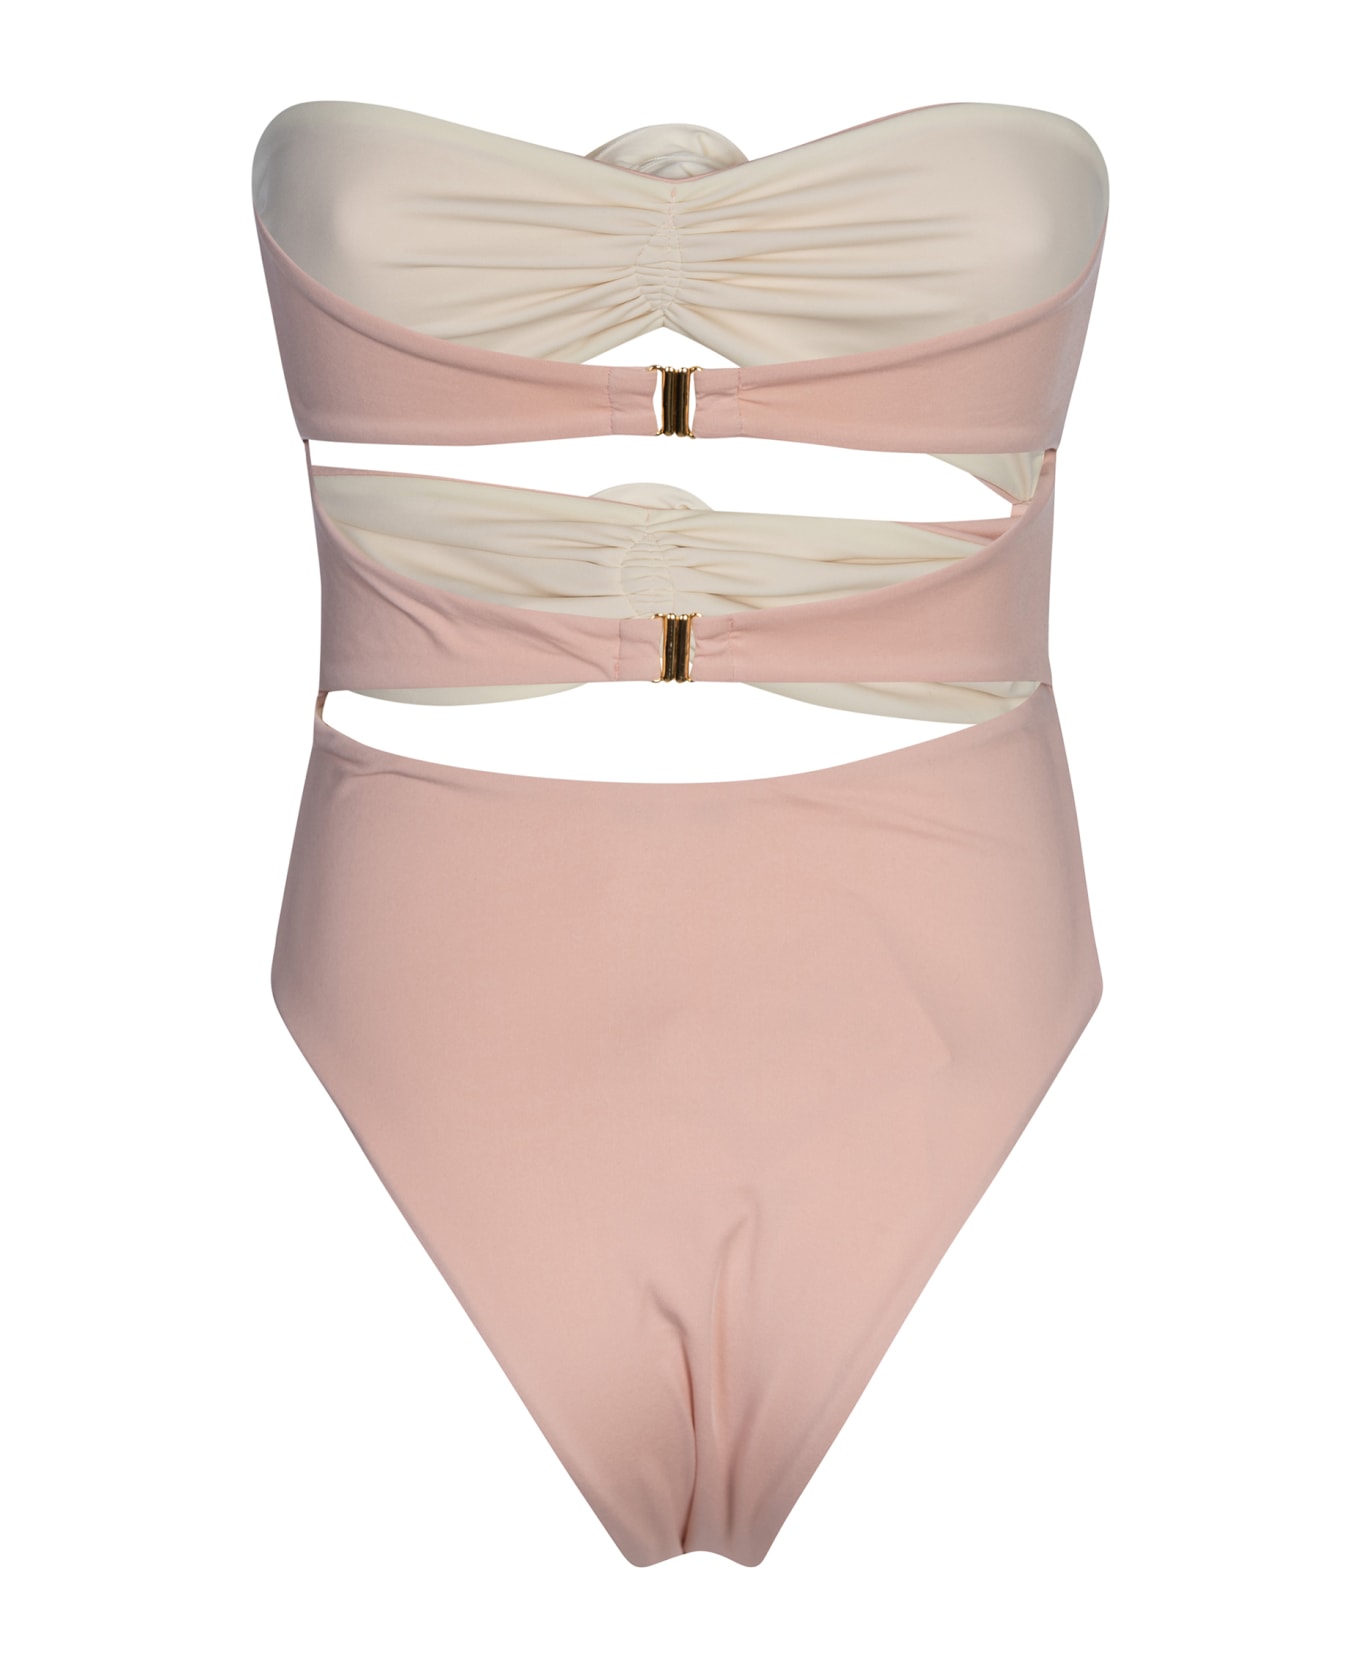 La Reveche Vesna One-piece Bikini - Quartz Rose/Ivory